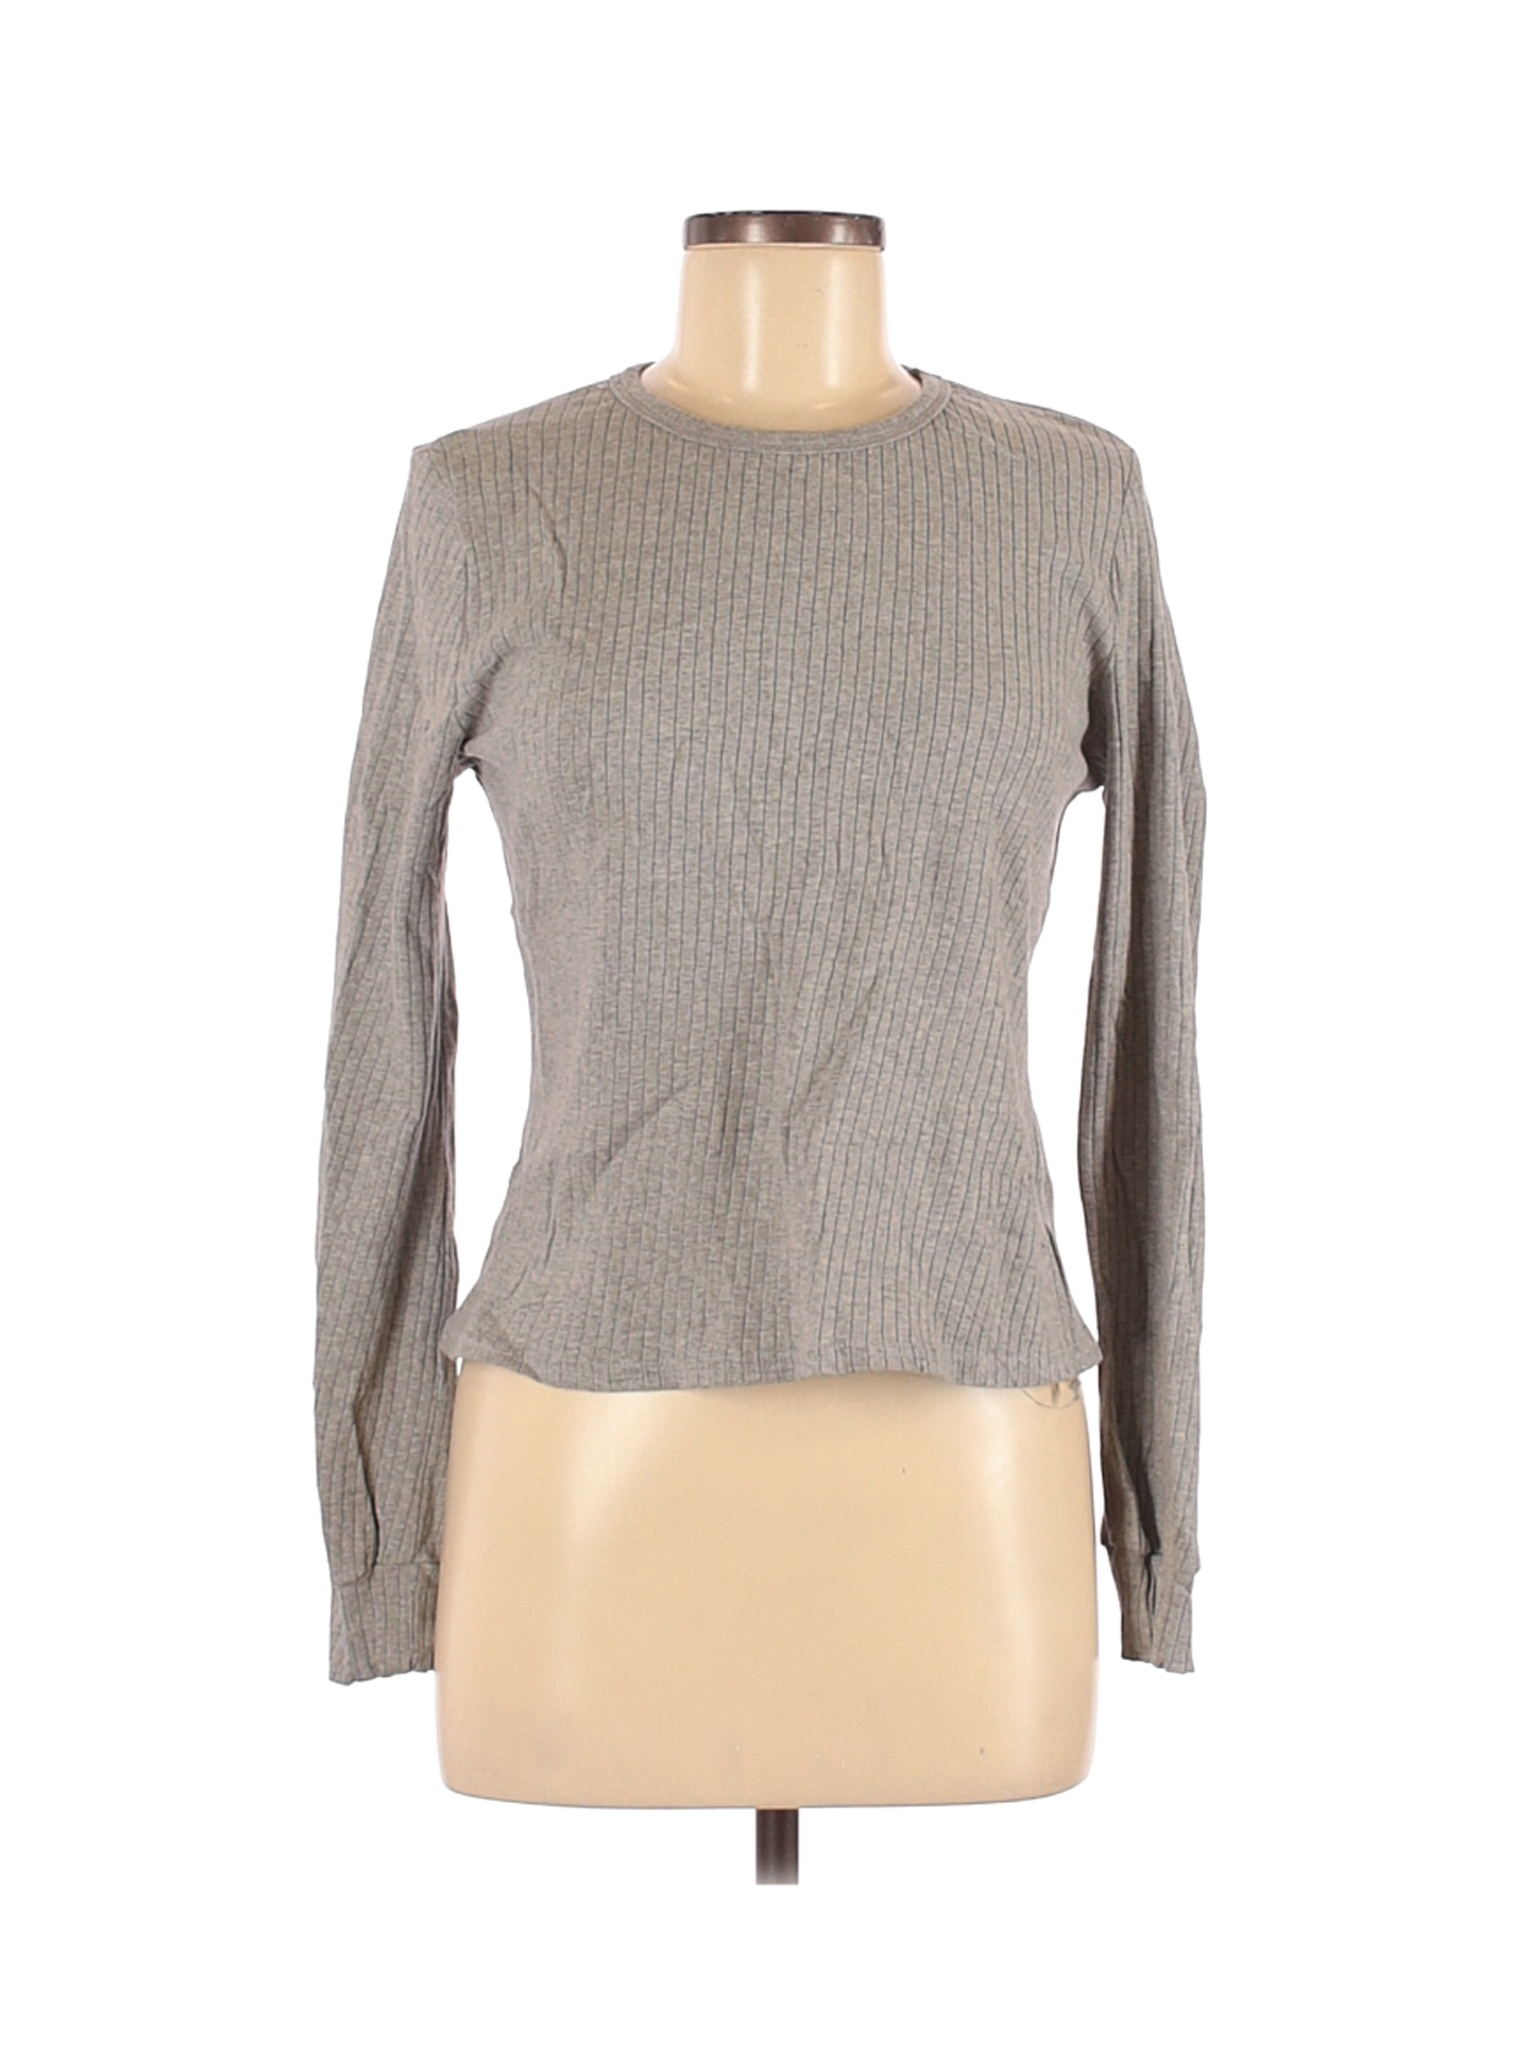 Shein Women Gray Long Sleeve Top L | eBay